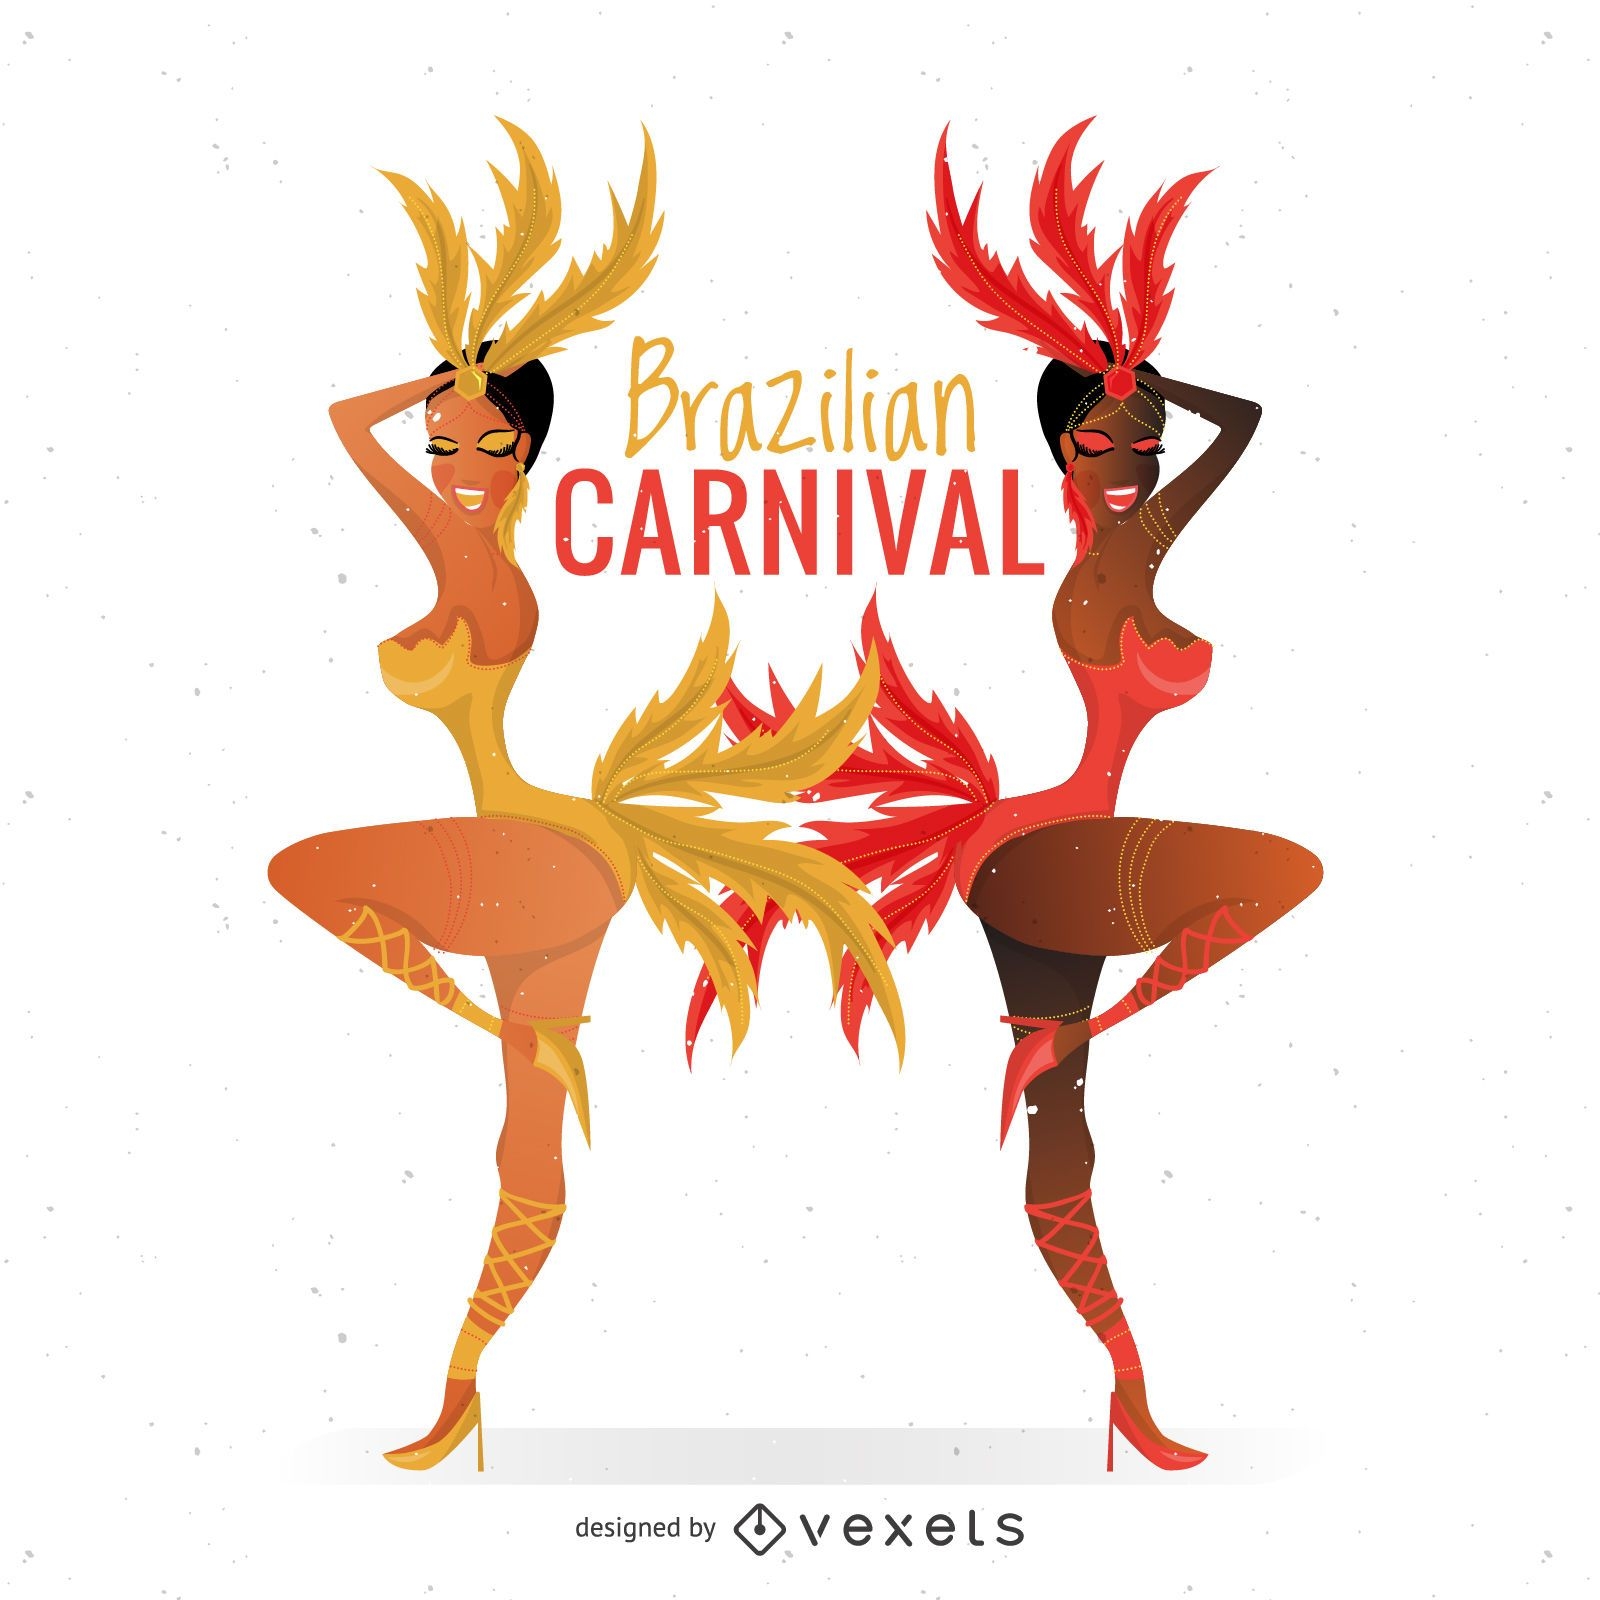 Bailarines de carnaval brasileño con plumas